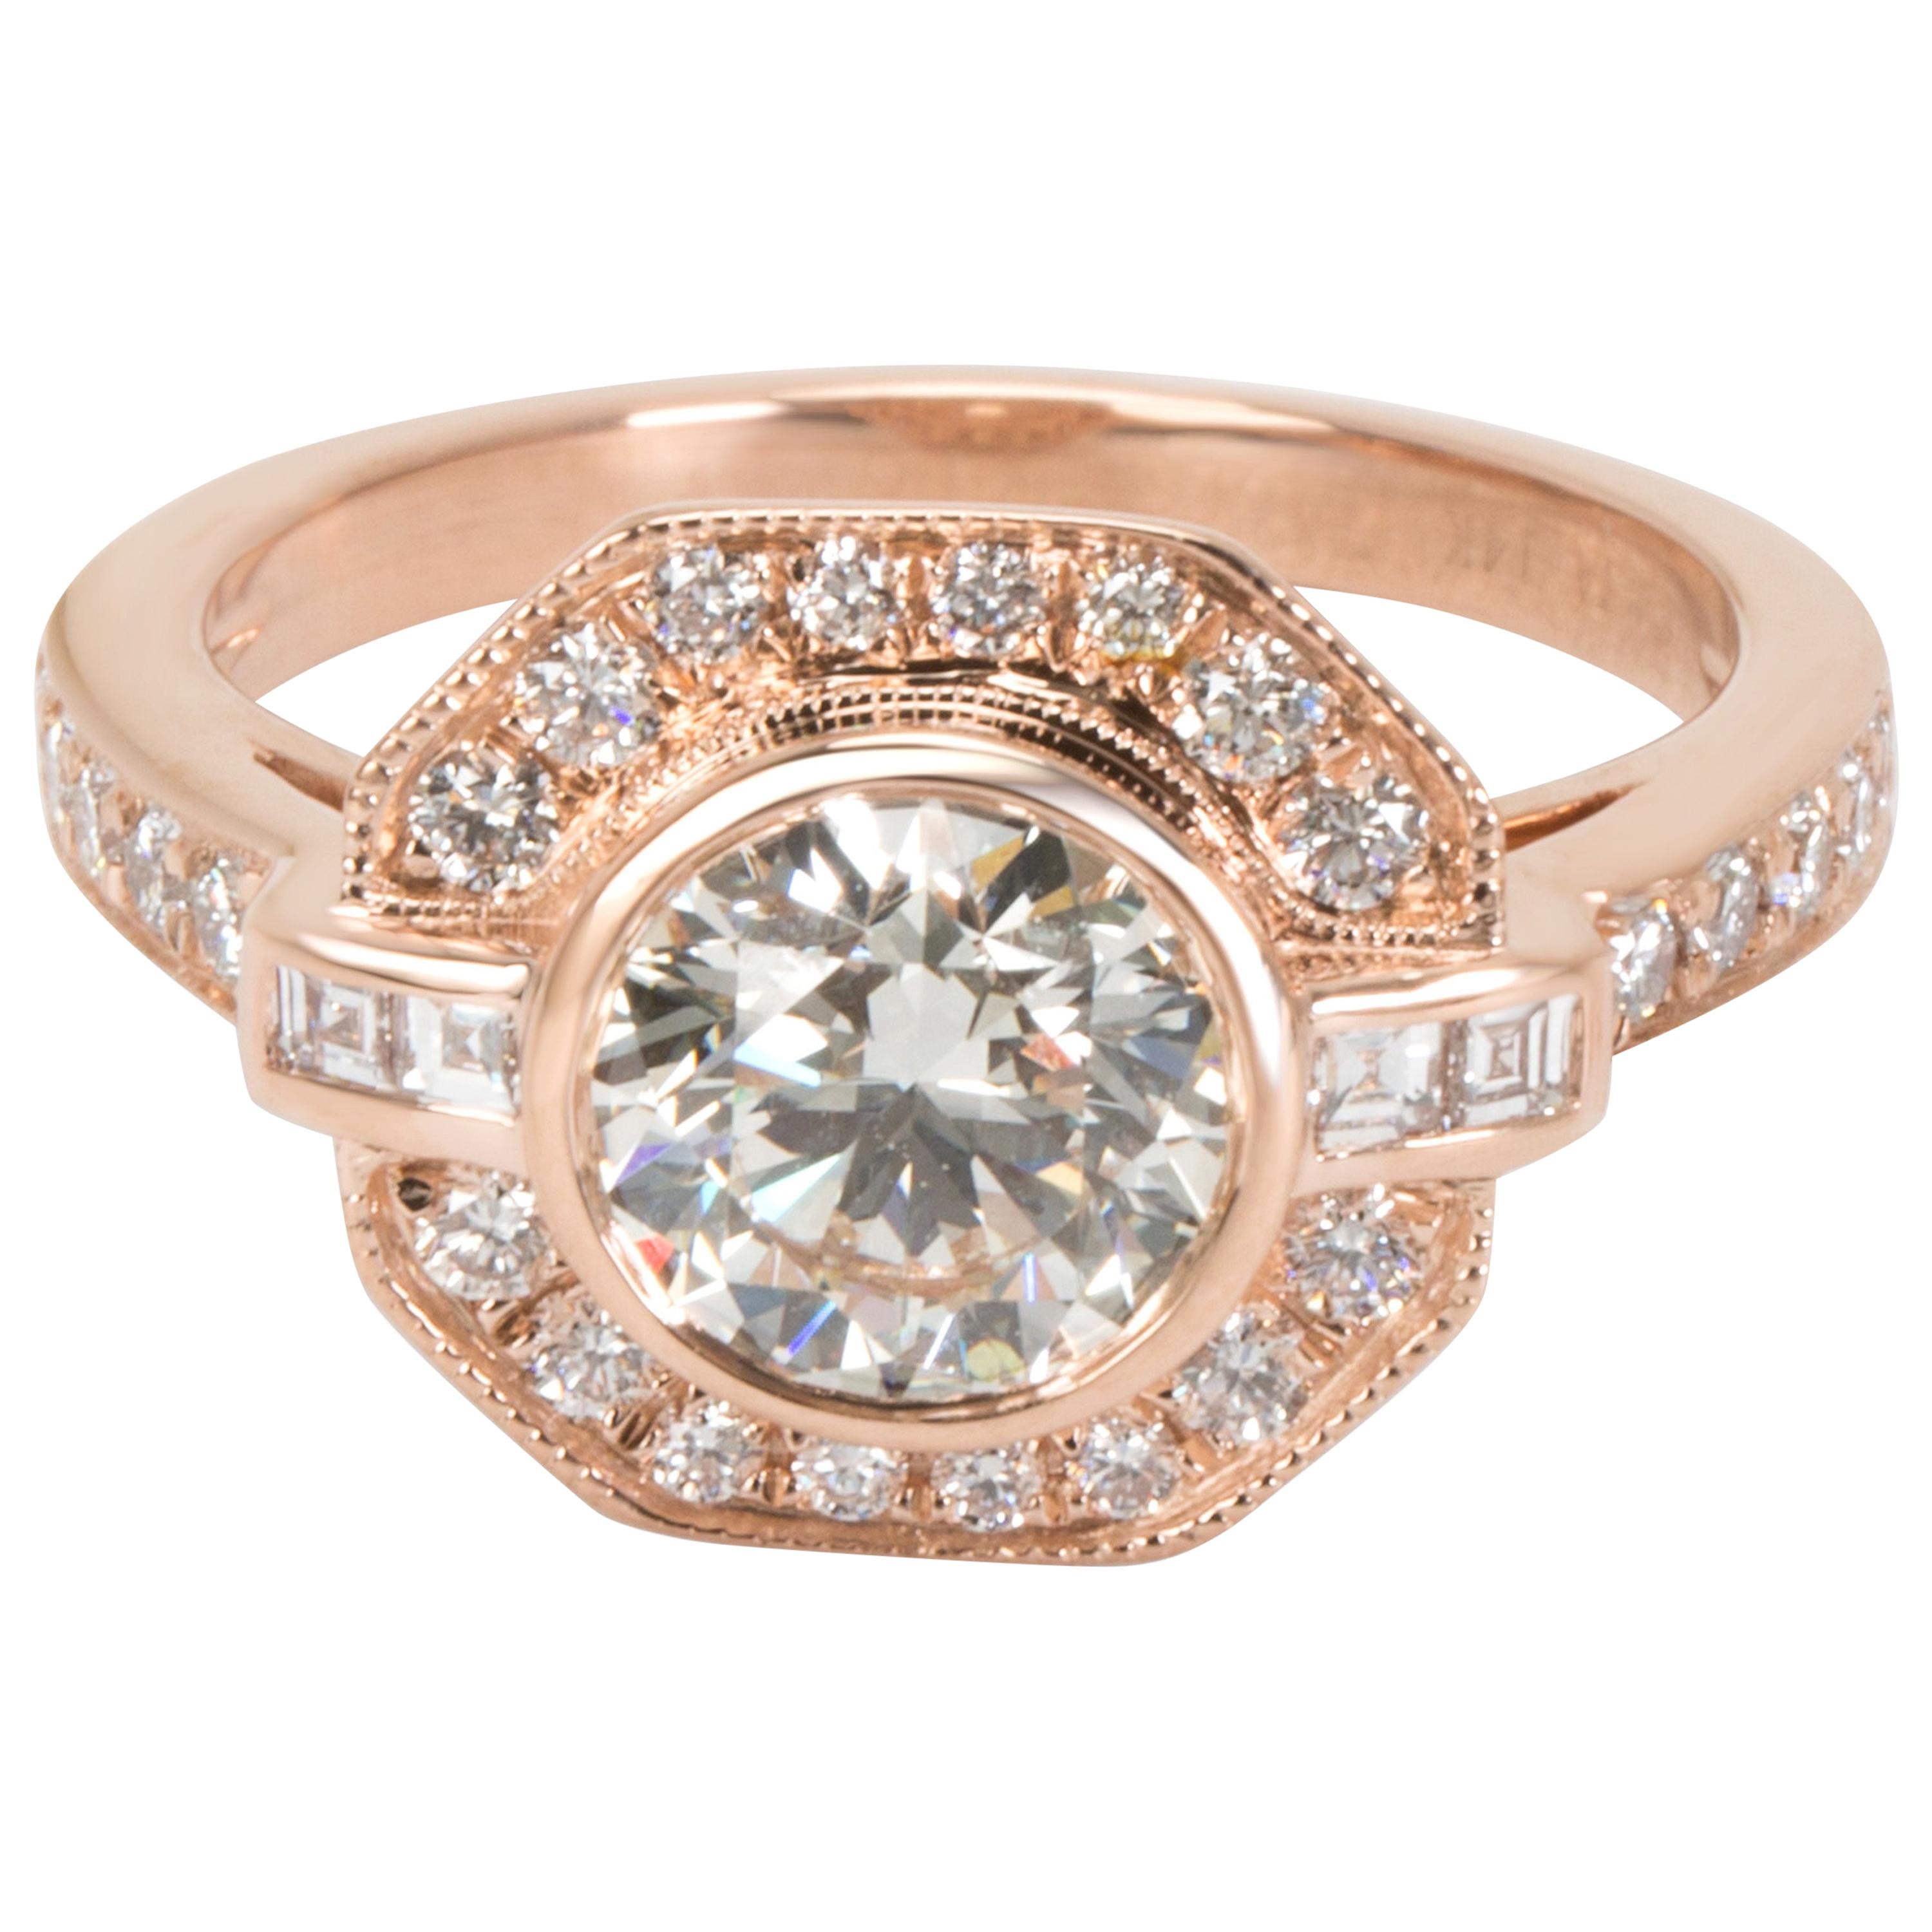 AGS Certified James Allen Diamond Engagement Ring in 14 Karat Rose Gold